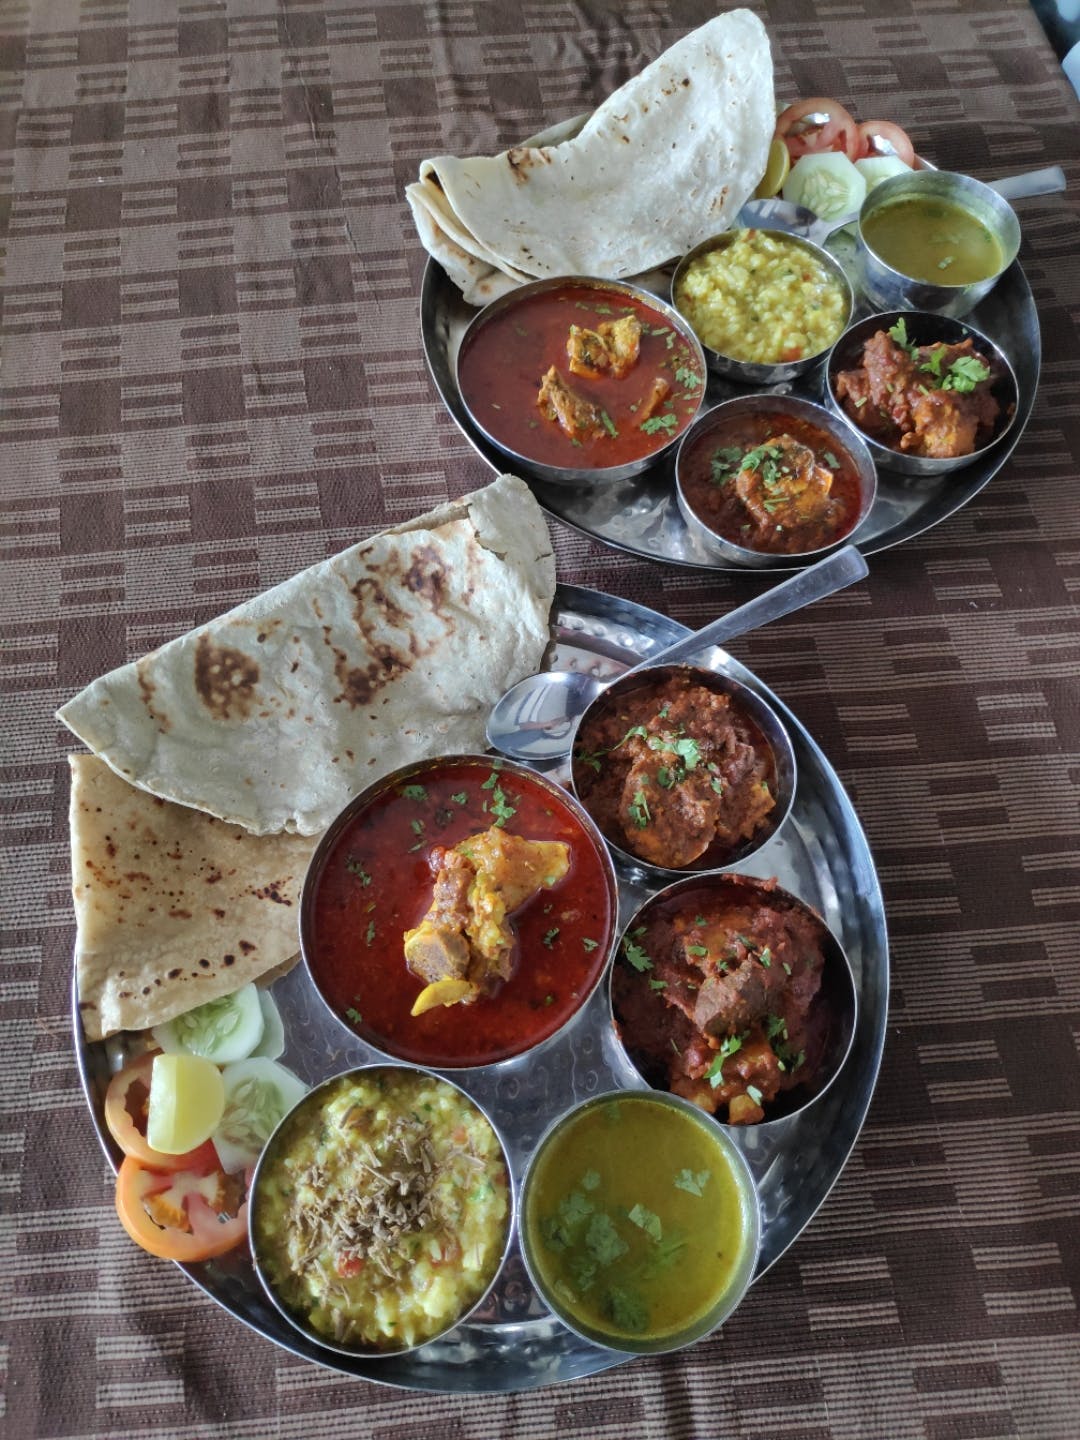 Dish,Food,Cuisine,Meal,Ingredient,Curry,Raita,Punjabi cuisine,Chapati,Produce